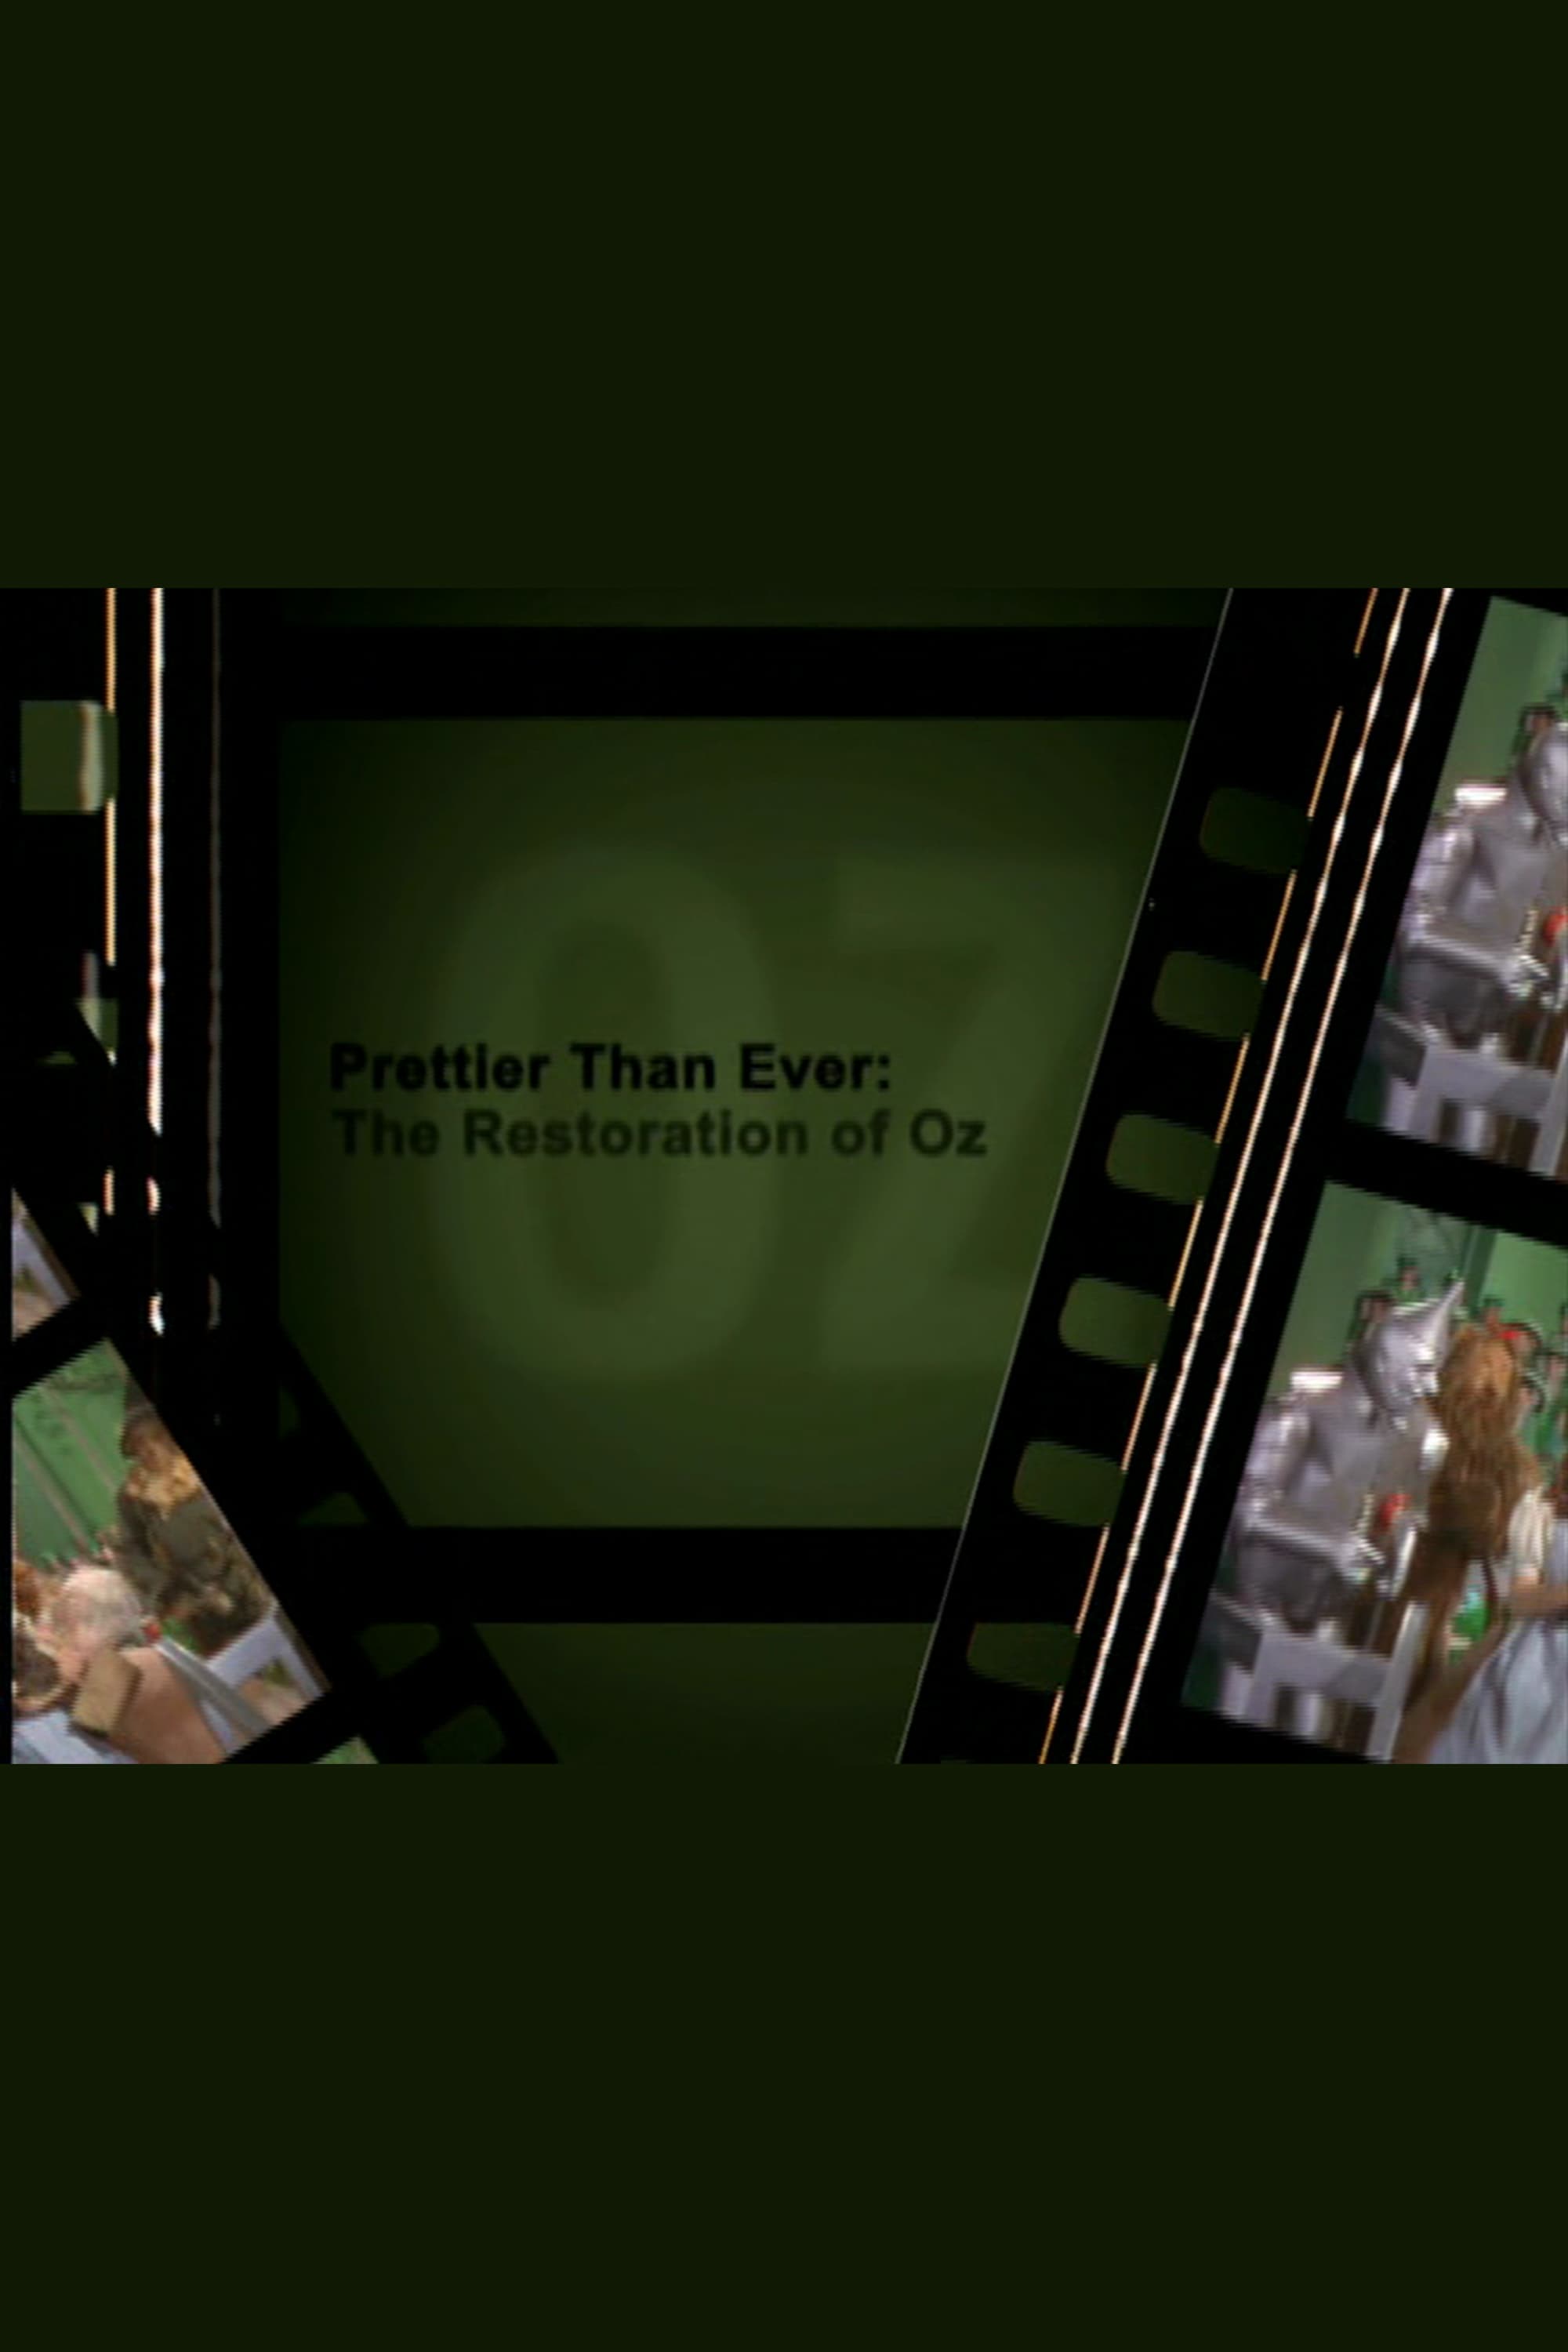 Prettier Than Ever: The Restoration of Oz